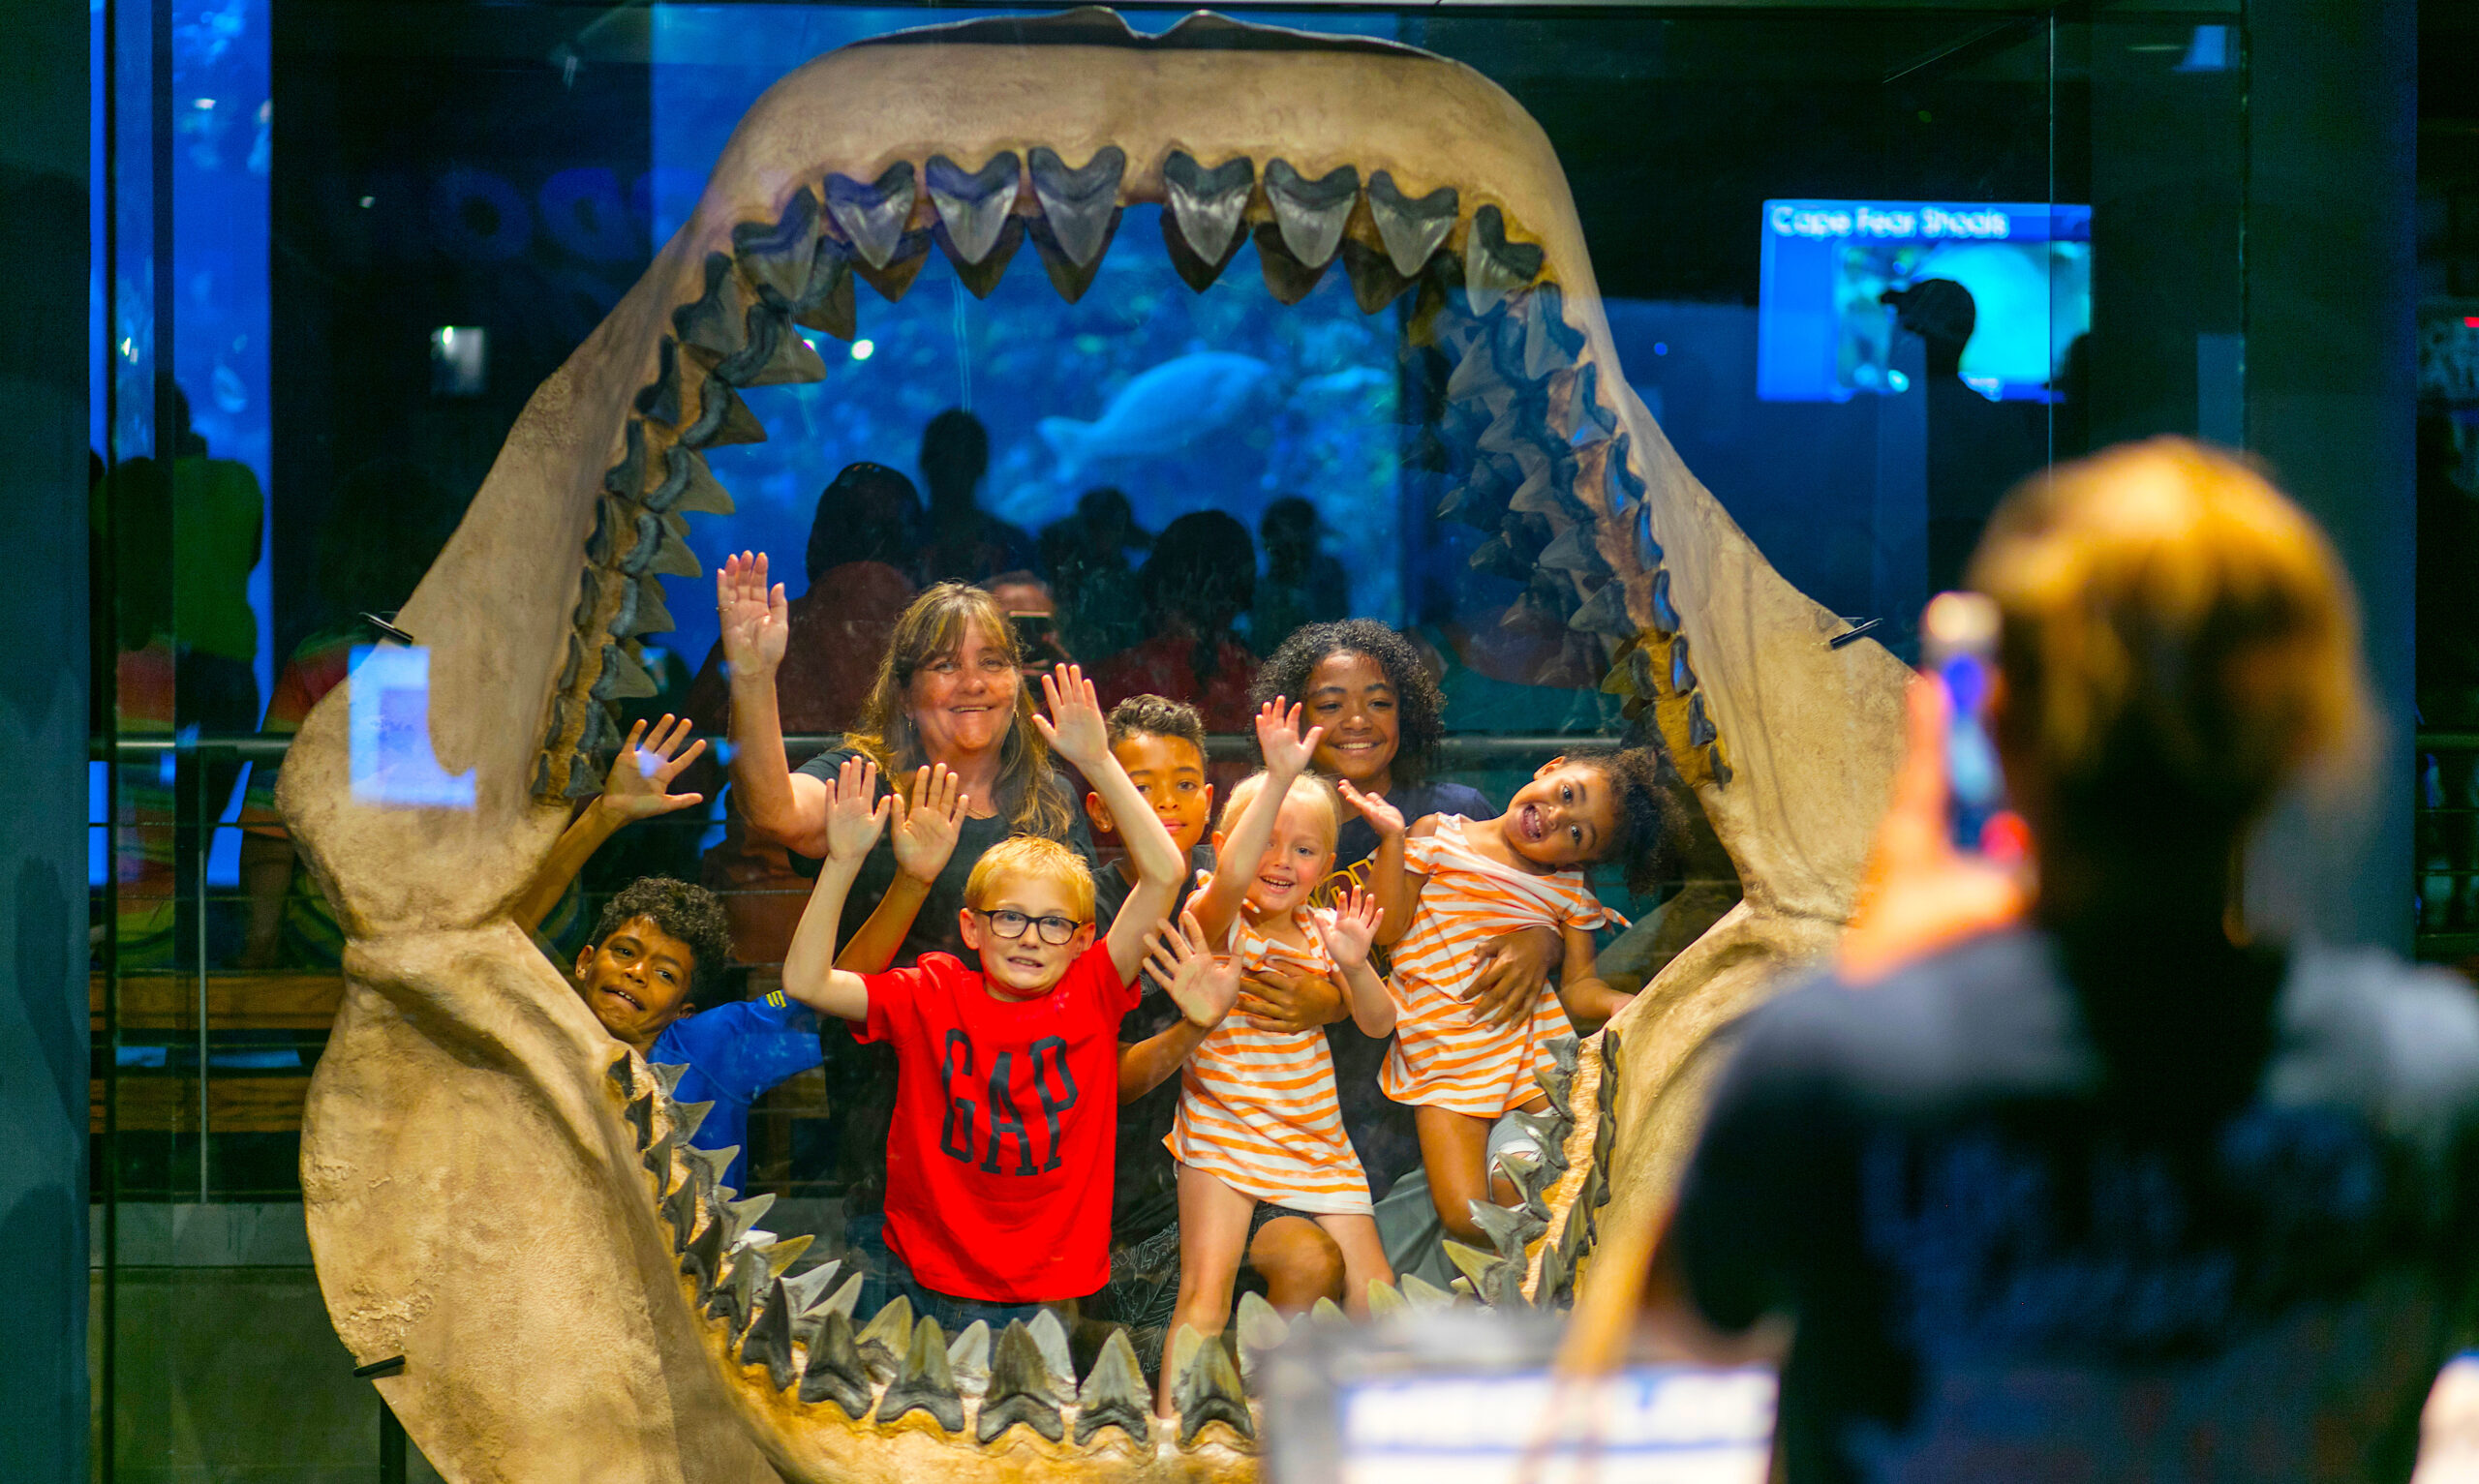 kids and teacher peer through the jaws of a megalodon shark